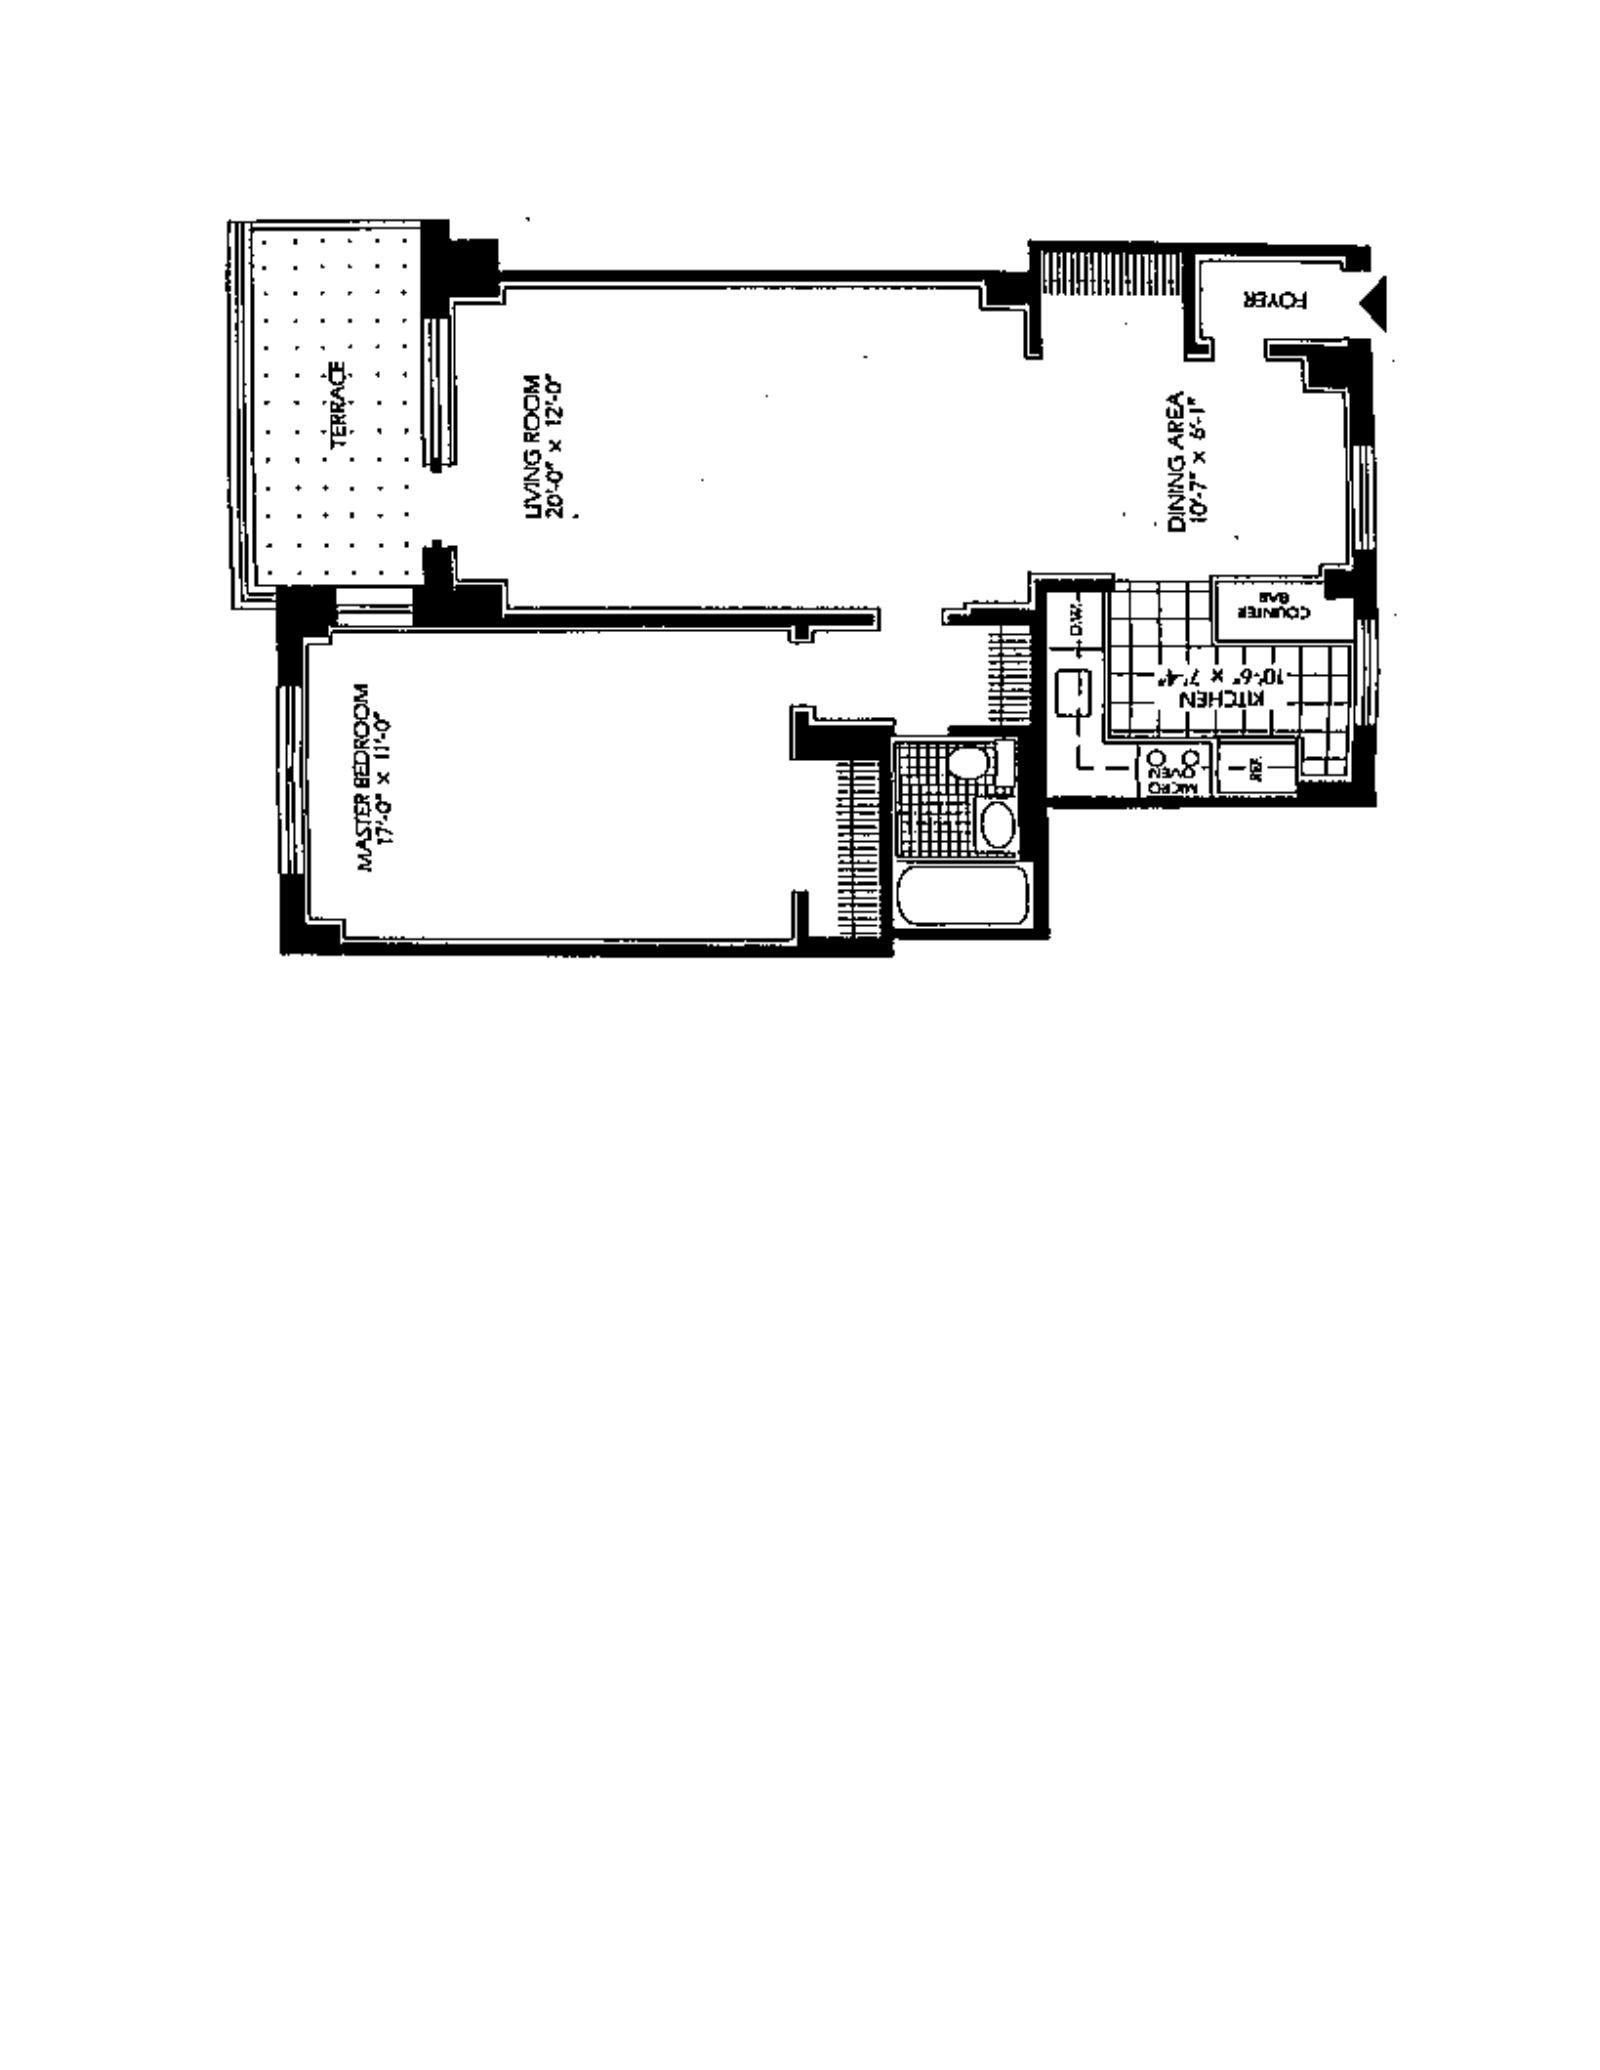 Floorplan for 5900 Arlington Avenue, 16S